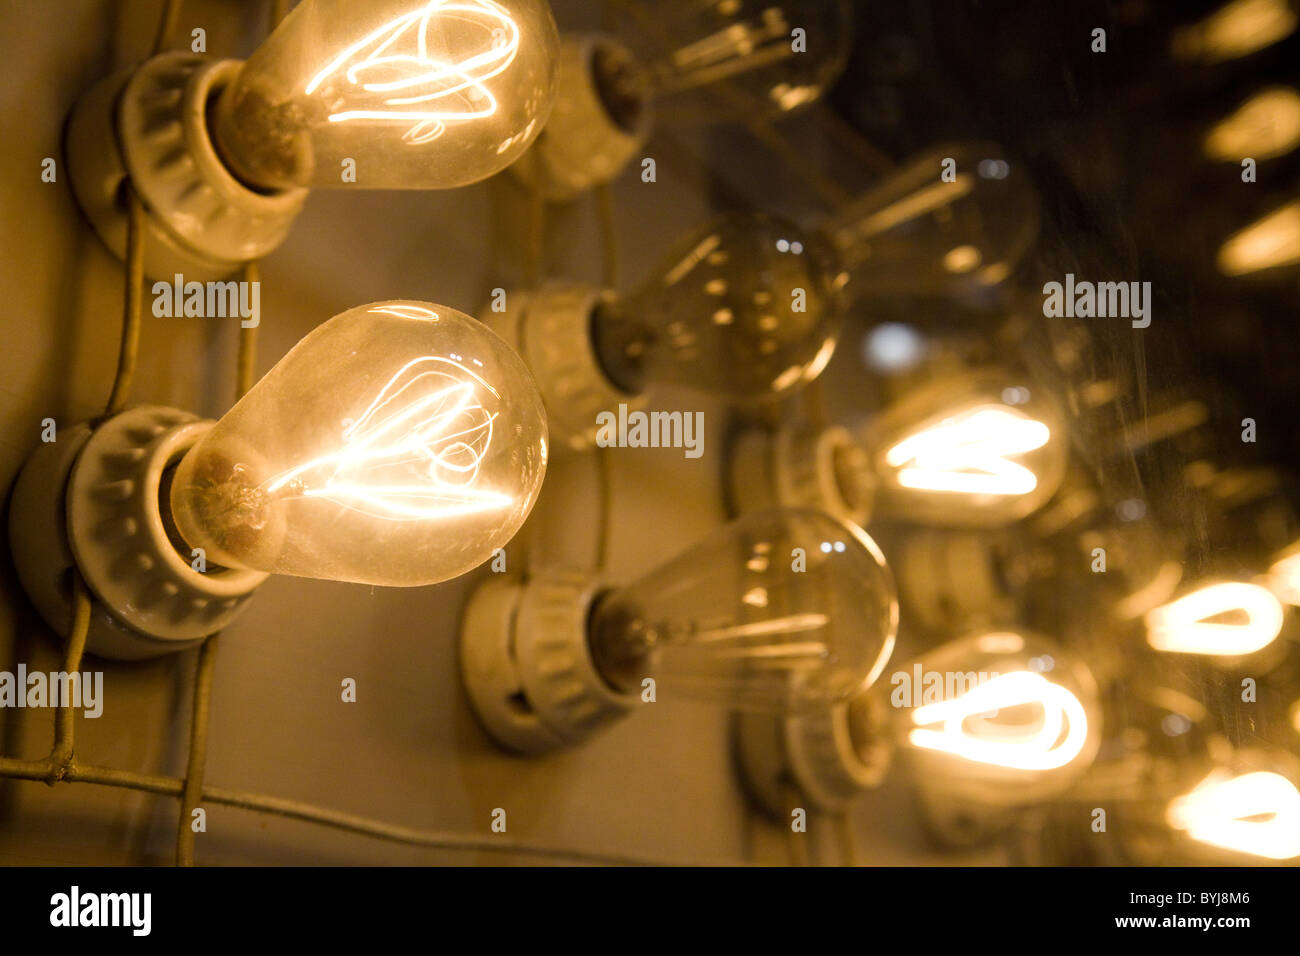 Antique carbon filament incandescent light bulbs Stock Photo